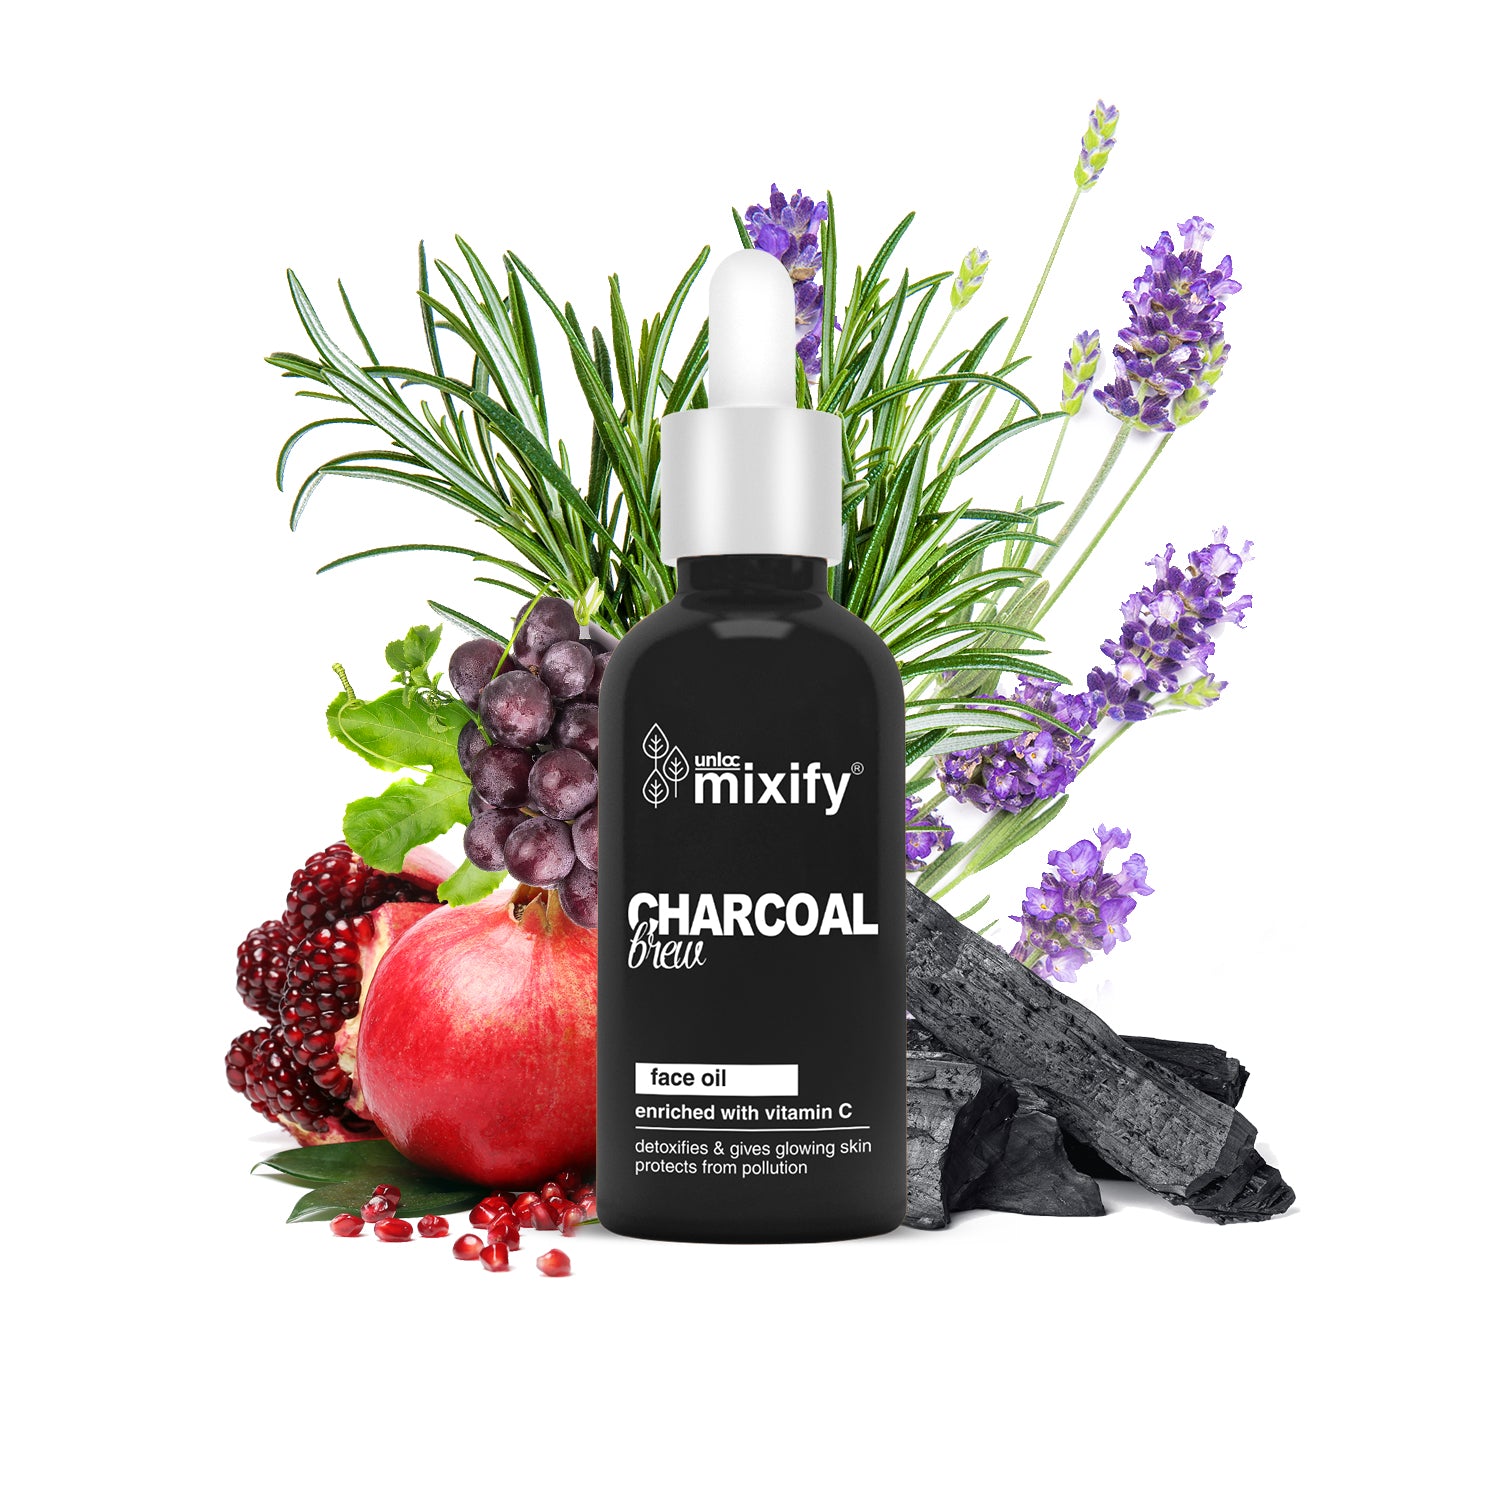 Unloc Mixify Charcoal Brew Face Oil - 30ml